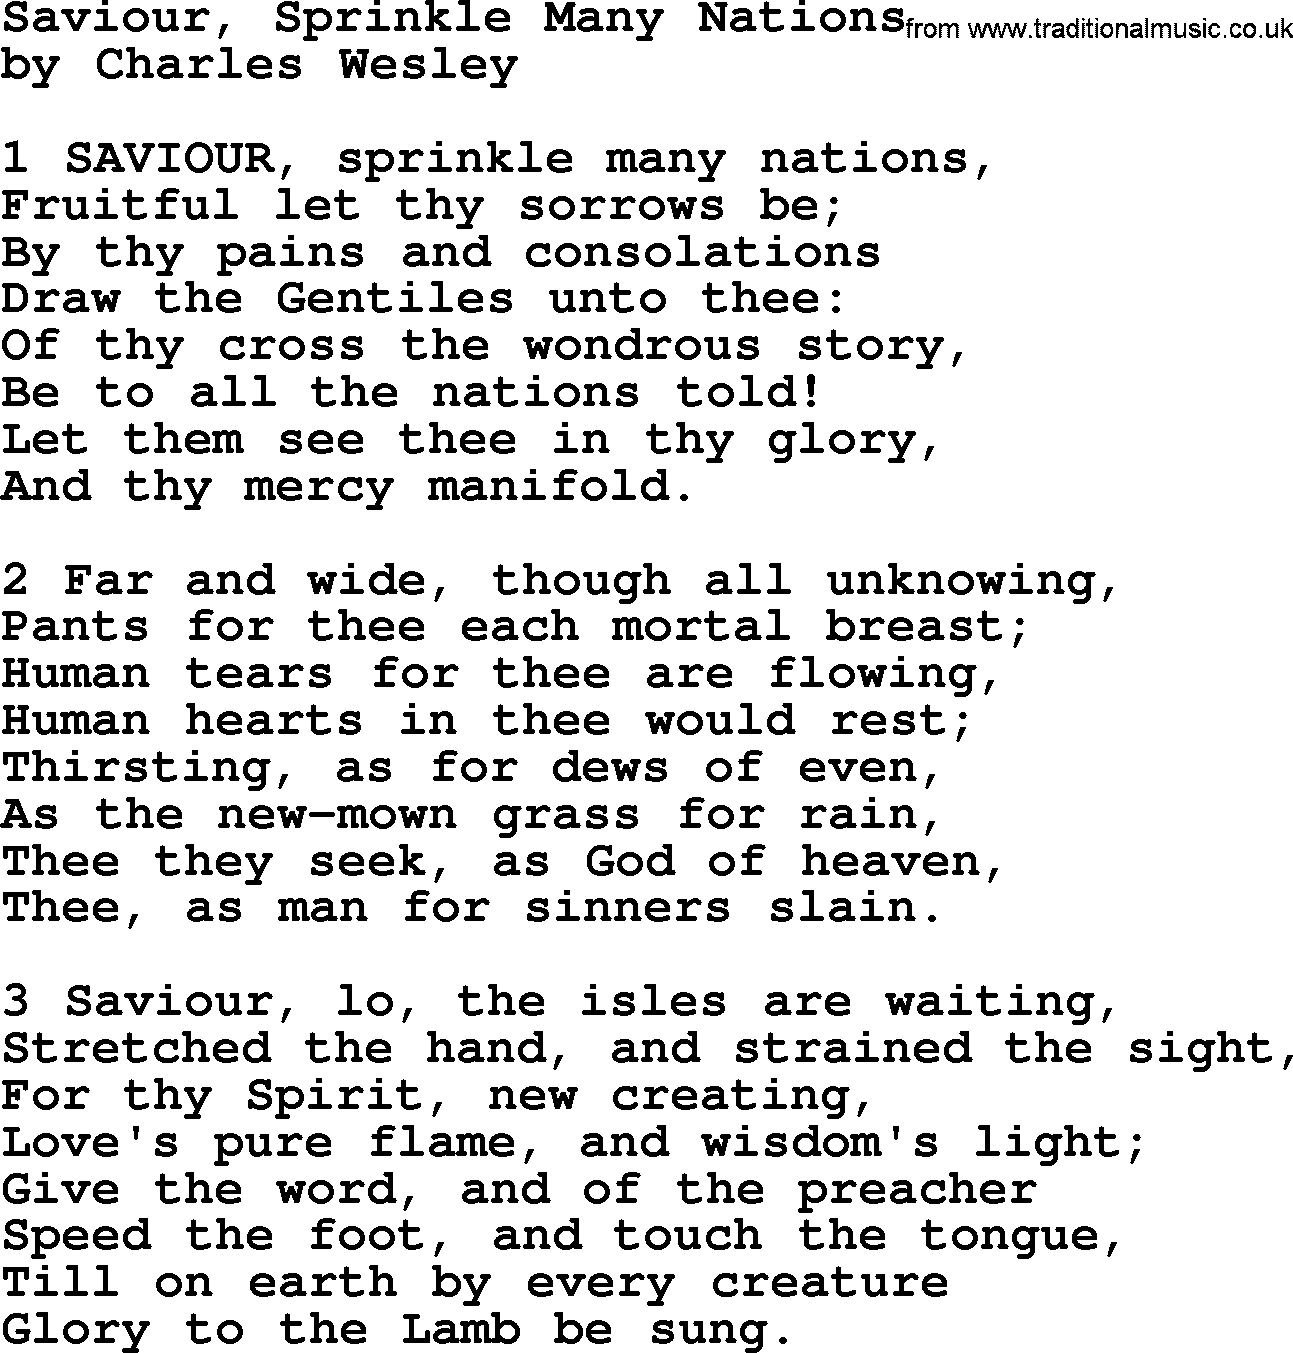 Charles Wesley hymn: Saviour, Sprinkle Many Nations, lyrics